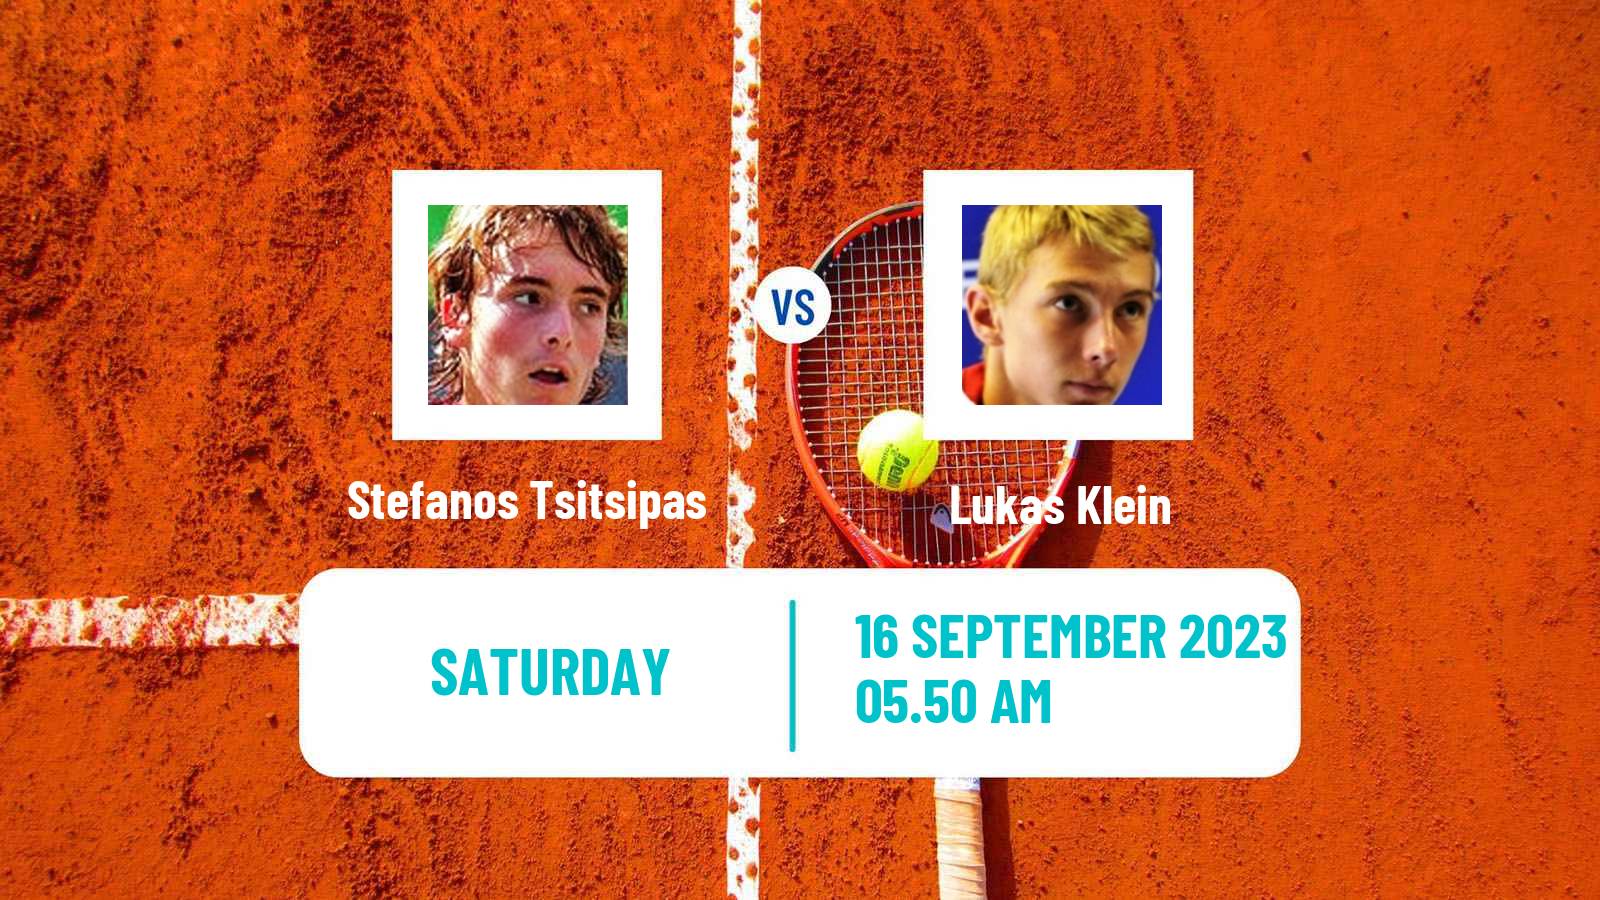 Tennis Davis Cup World Group I Stefanos Tsitsipas - Lukas Klein